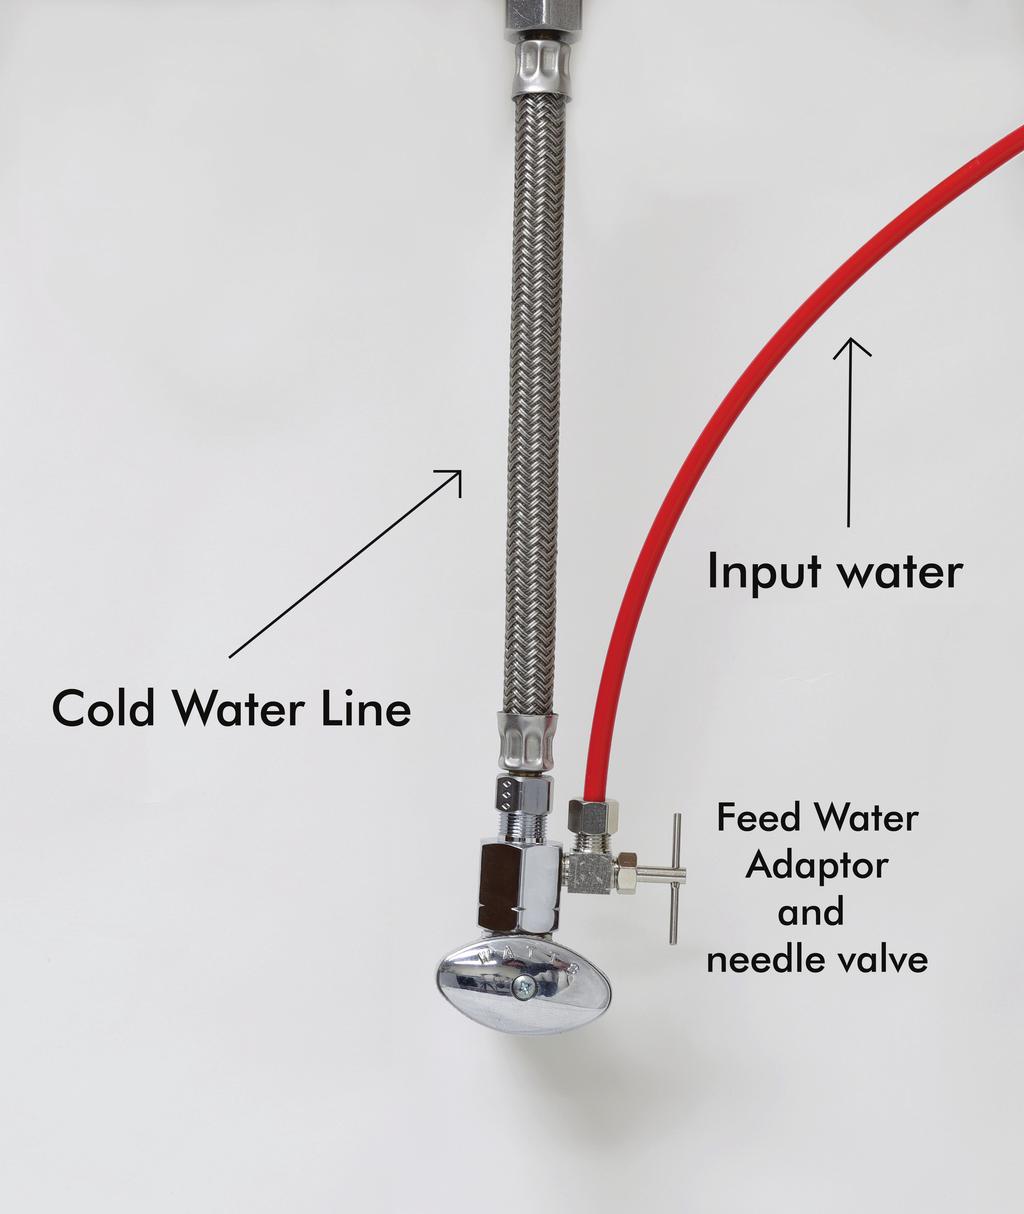 To open needle valve: To close needle valve: Turn needle handle counter-clockwise. Turn needle handle clockwise.